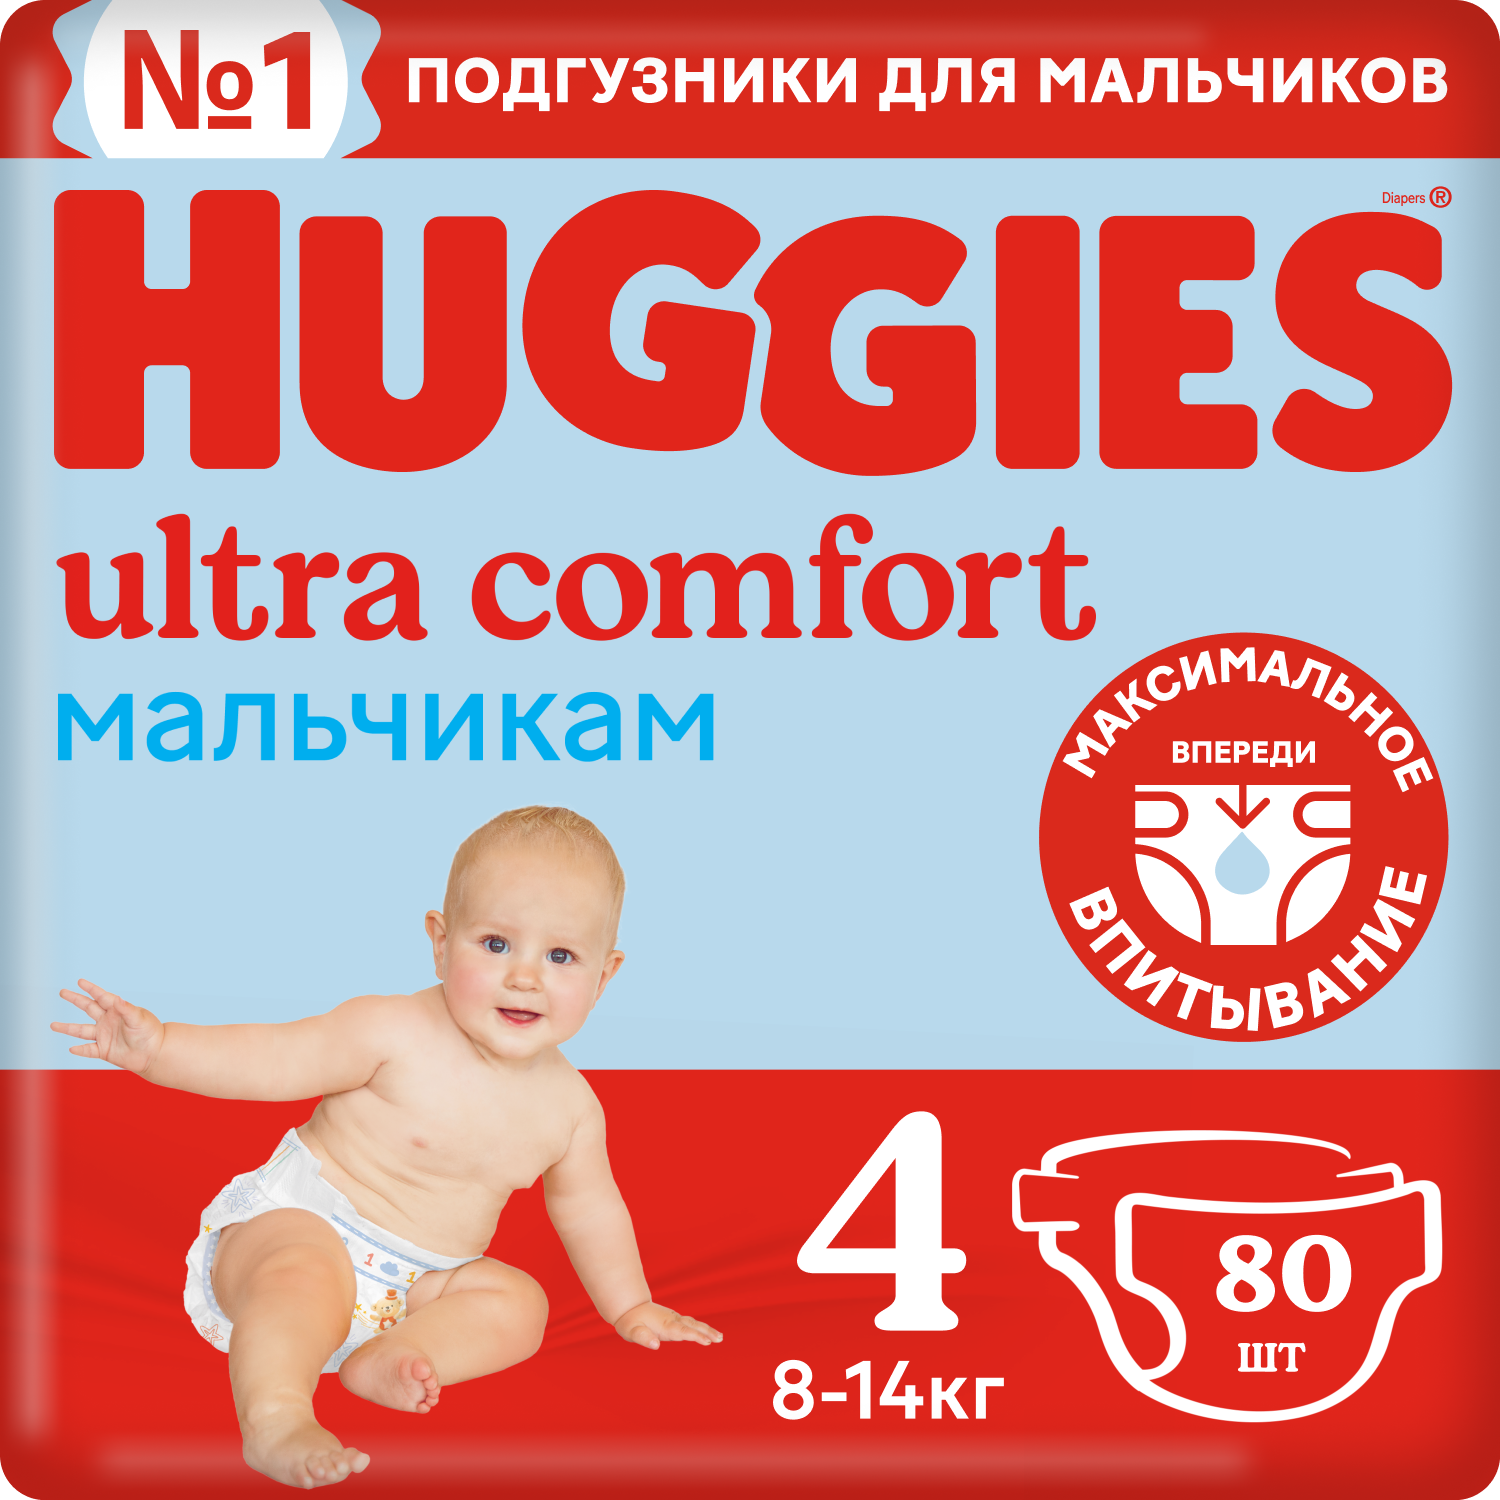  Ultra Comfort u21164 8-14 80